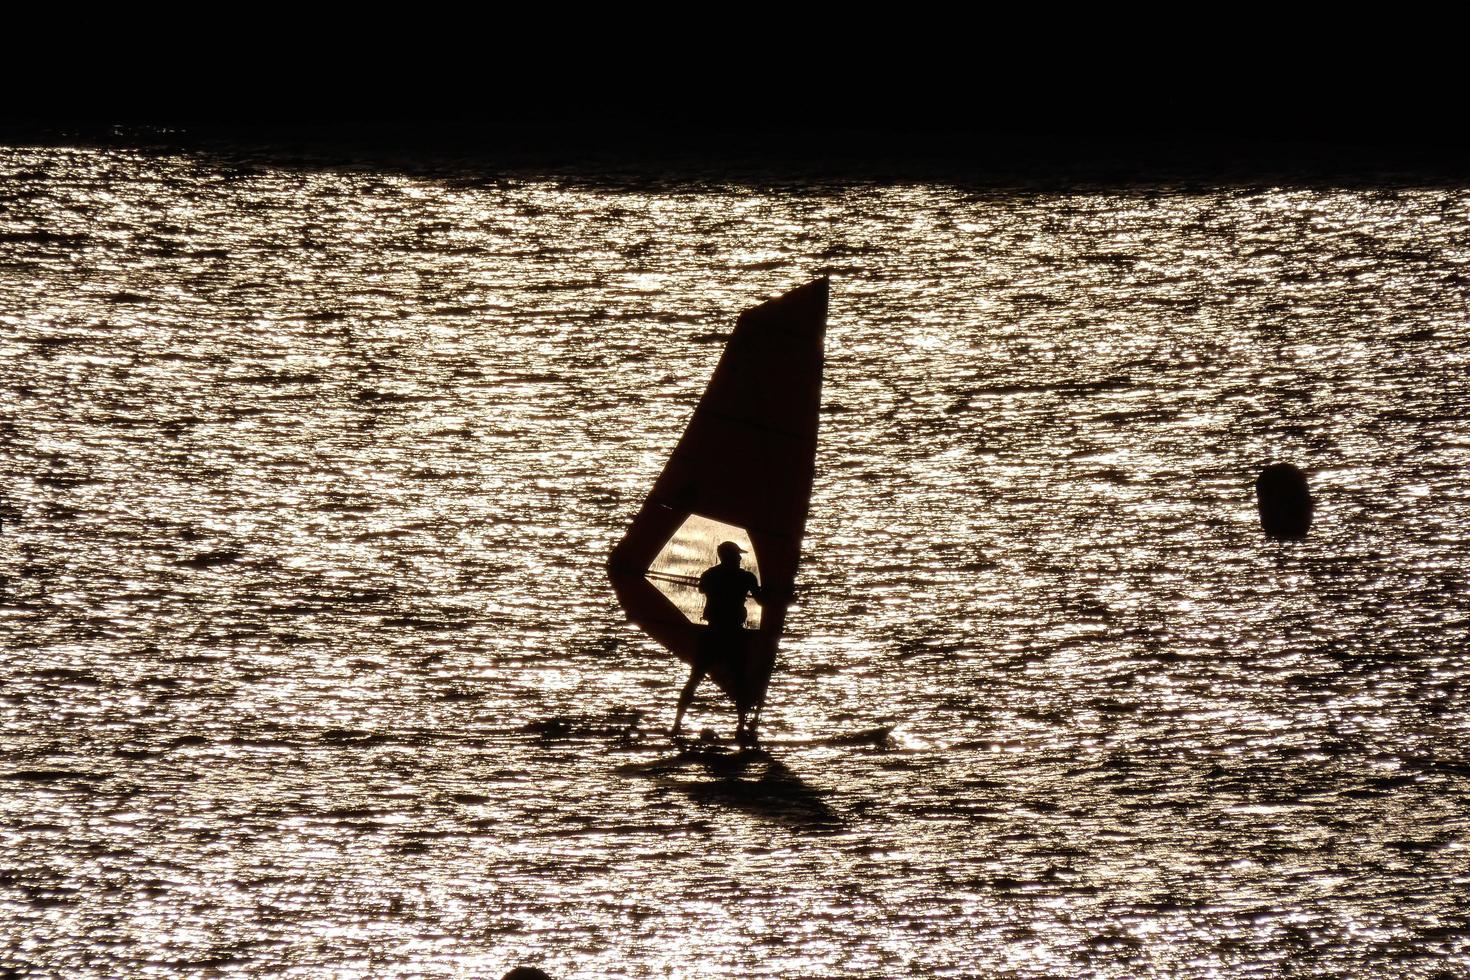 beoefenen het windsurfen in de middellandse Zee zee, kalmte zee foto